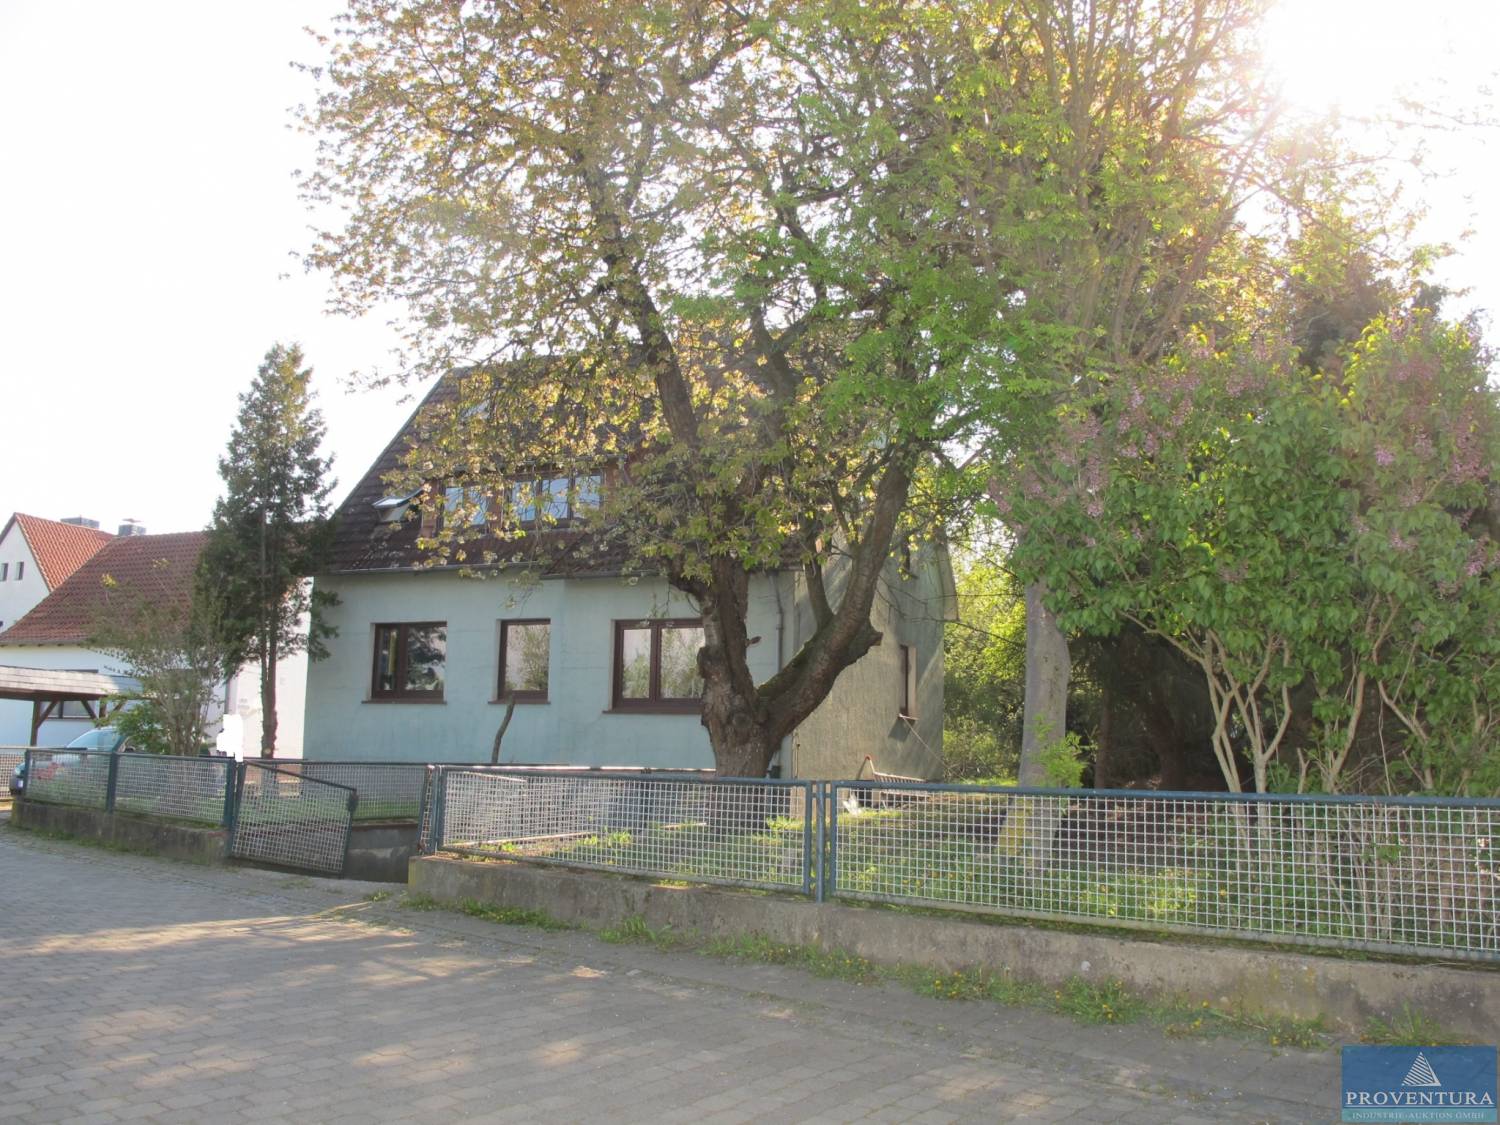 1-2-Familienhaus nahe Göttingen, 37176 Angerstein